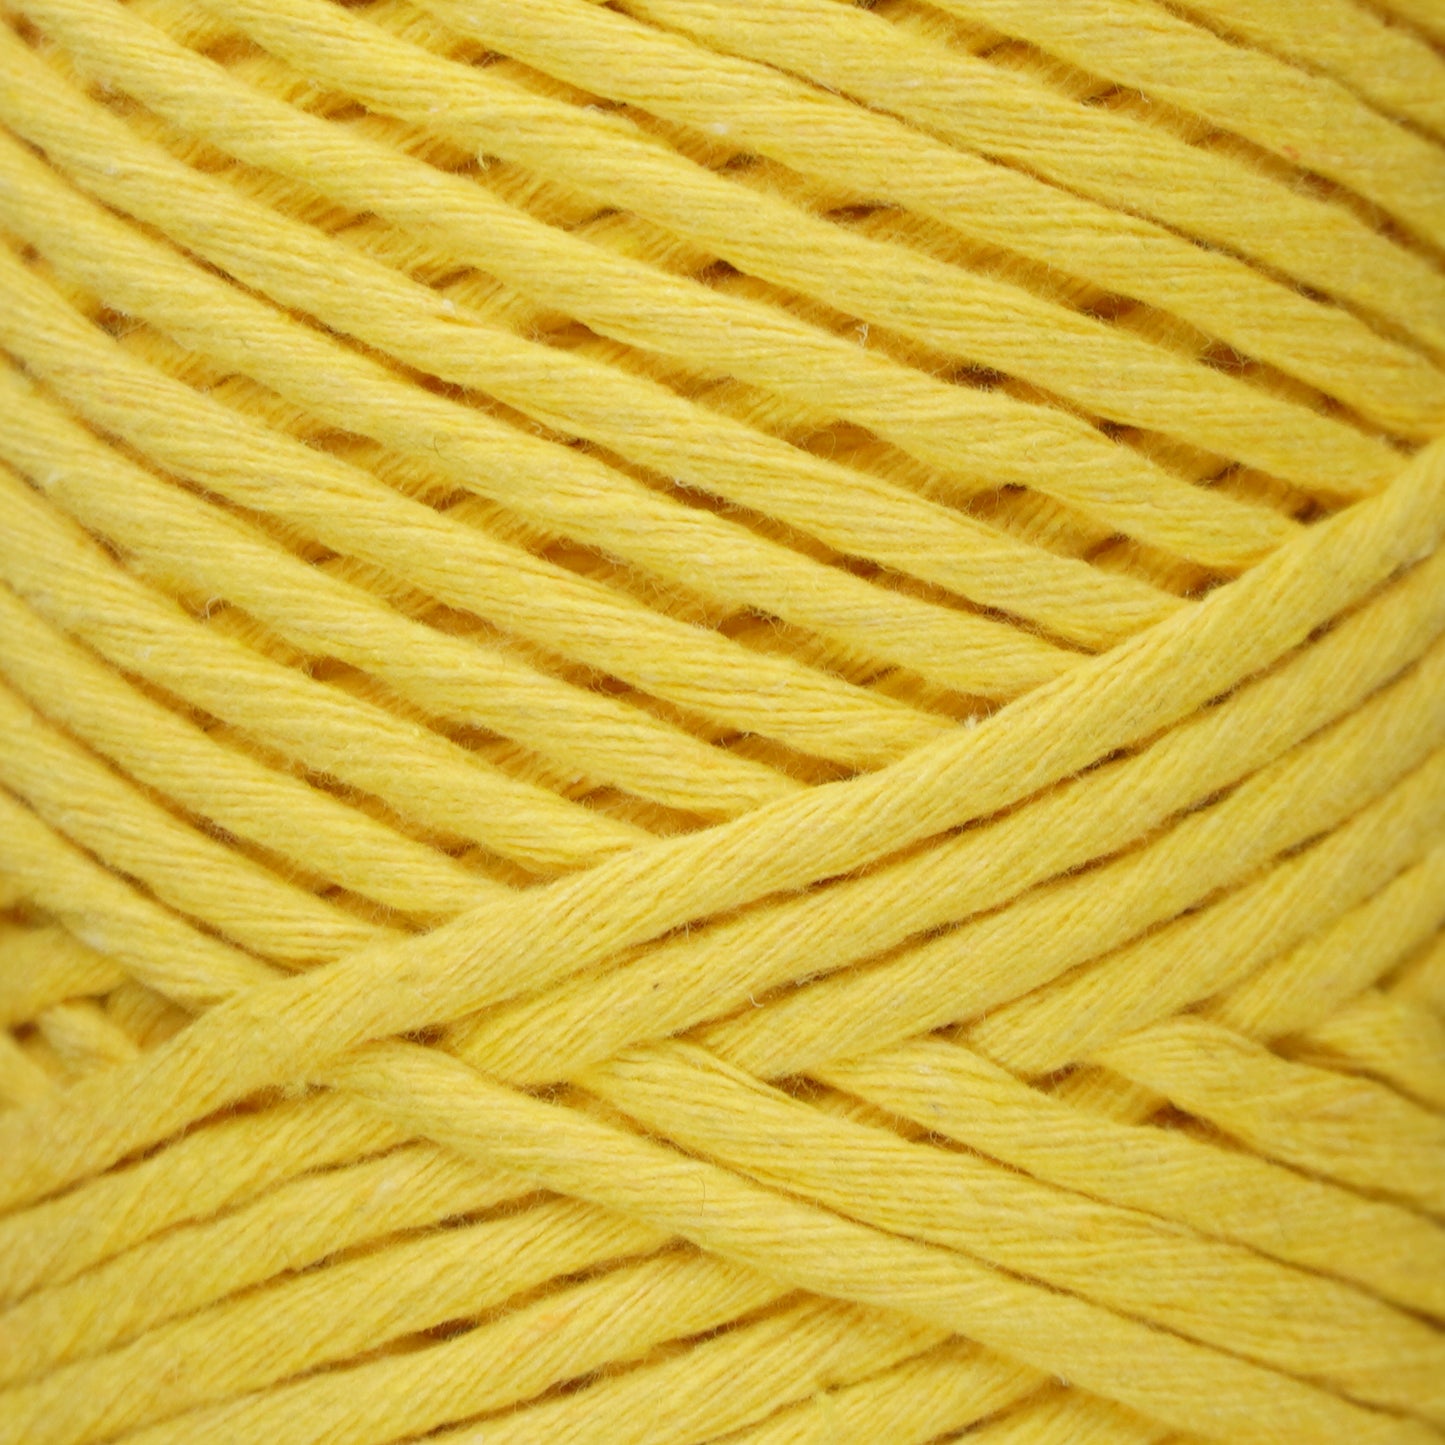 Single Strand Macrame Cord 3 mm x 100 Yards (295 feet) - Yellow